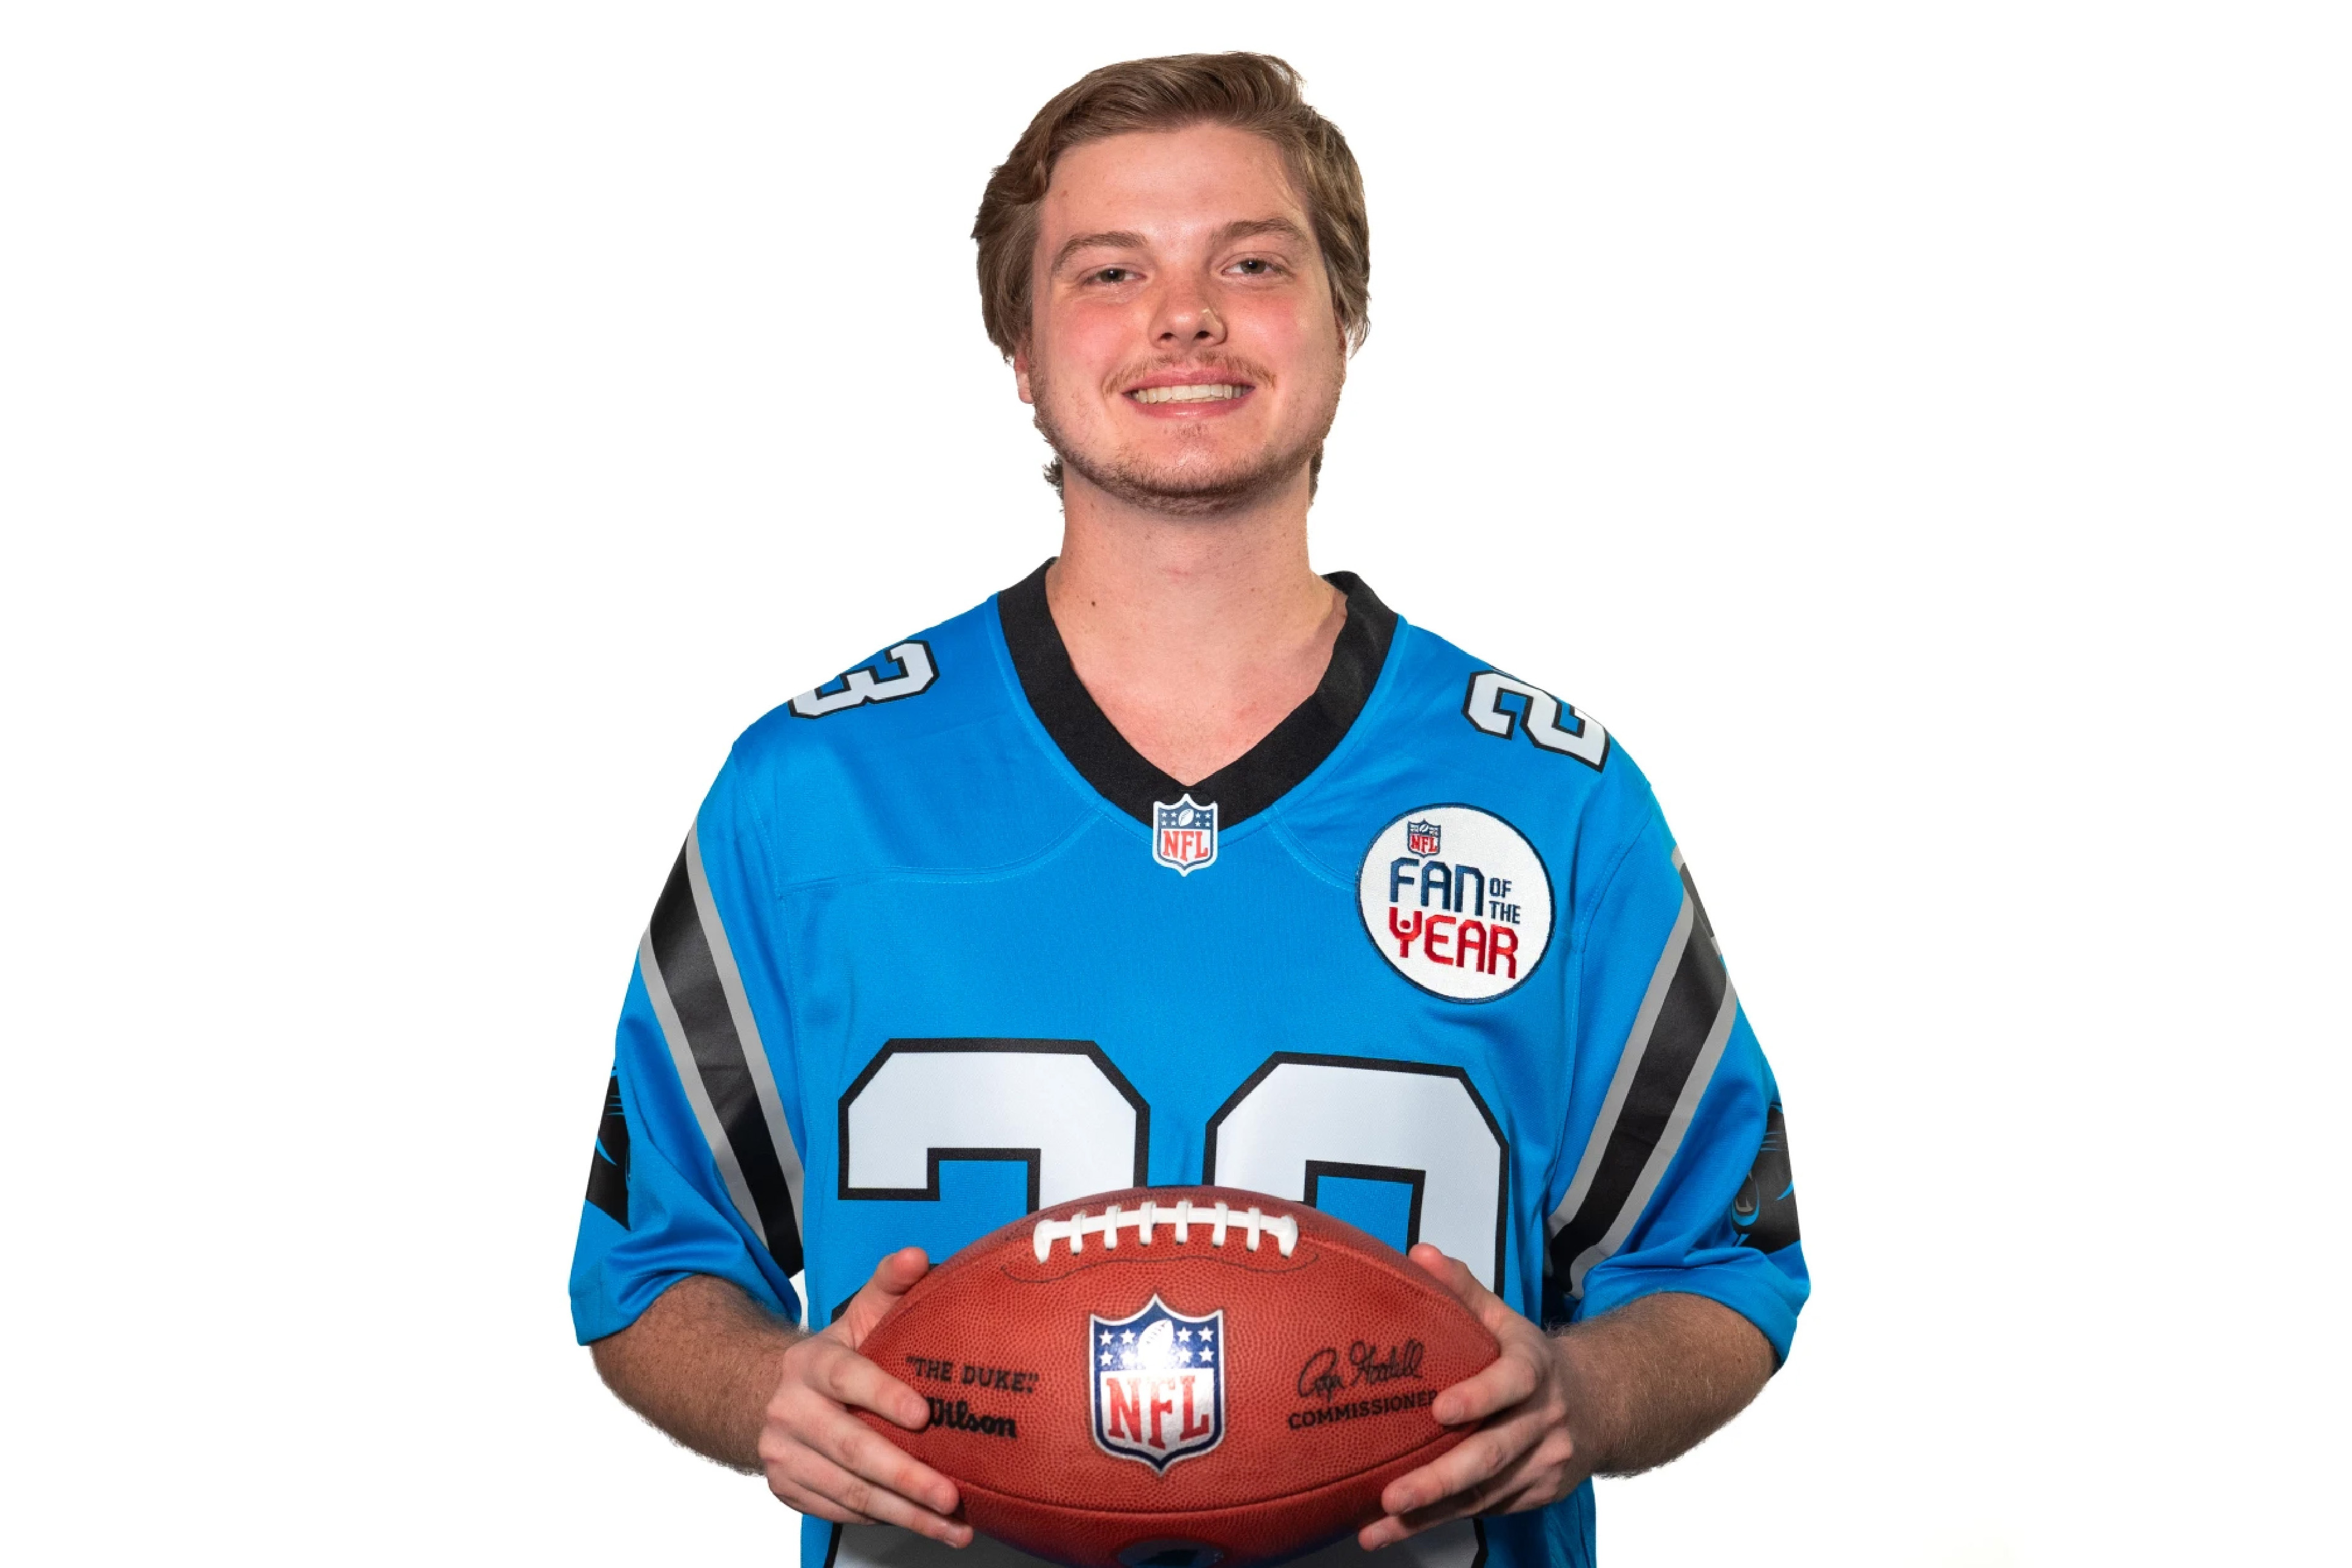 Cameron Pierson holding football and wearing a Carolina Panthers jersey.